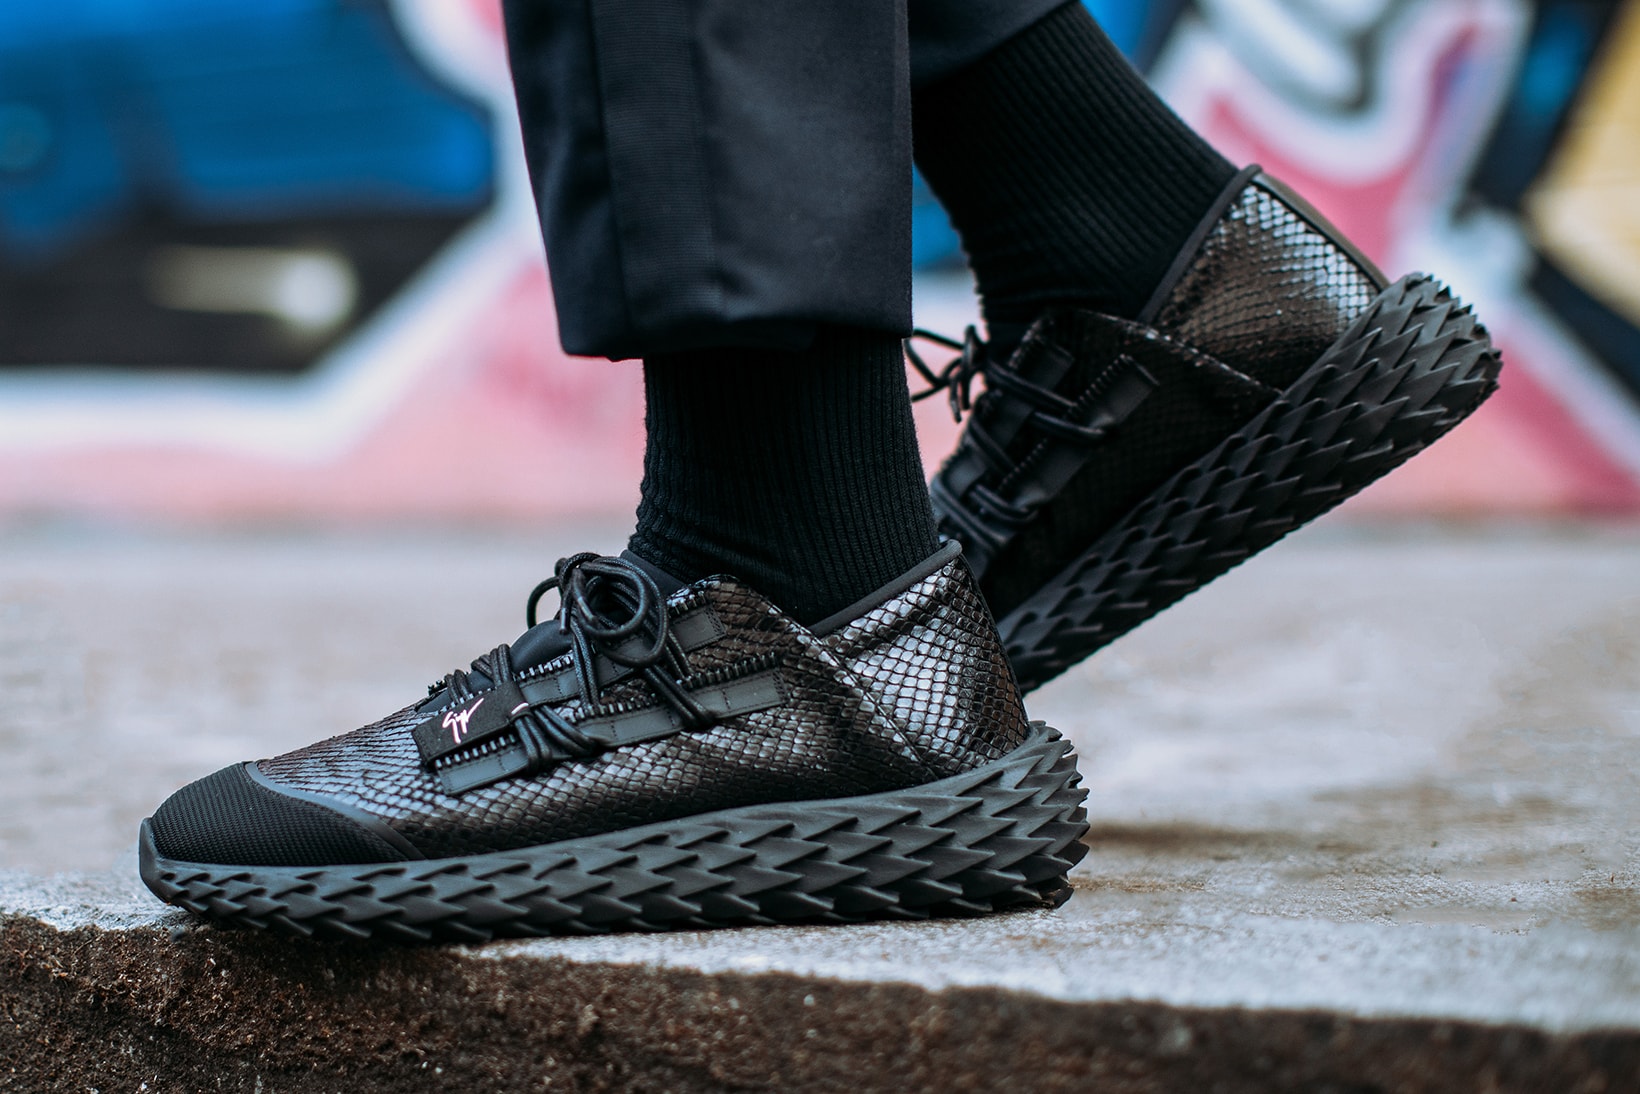 Giuseppe Zanotti Men's Embossed Leather Mid-Top Sneakers